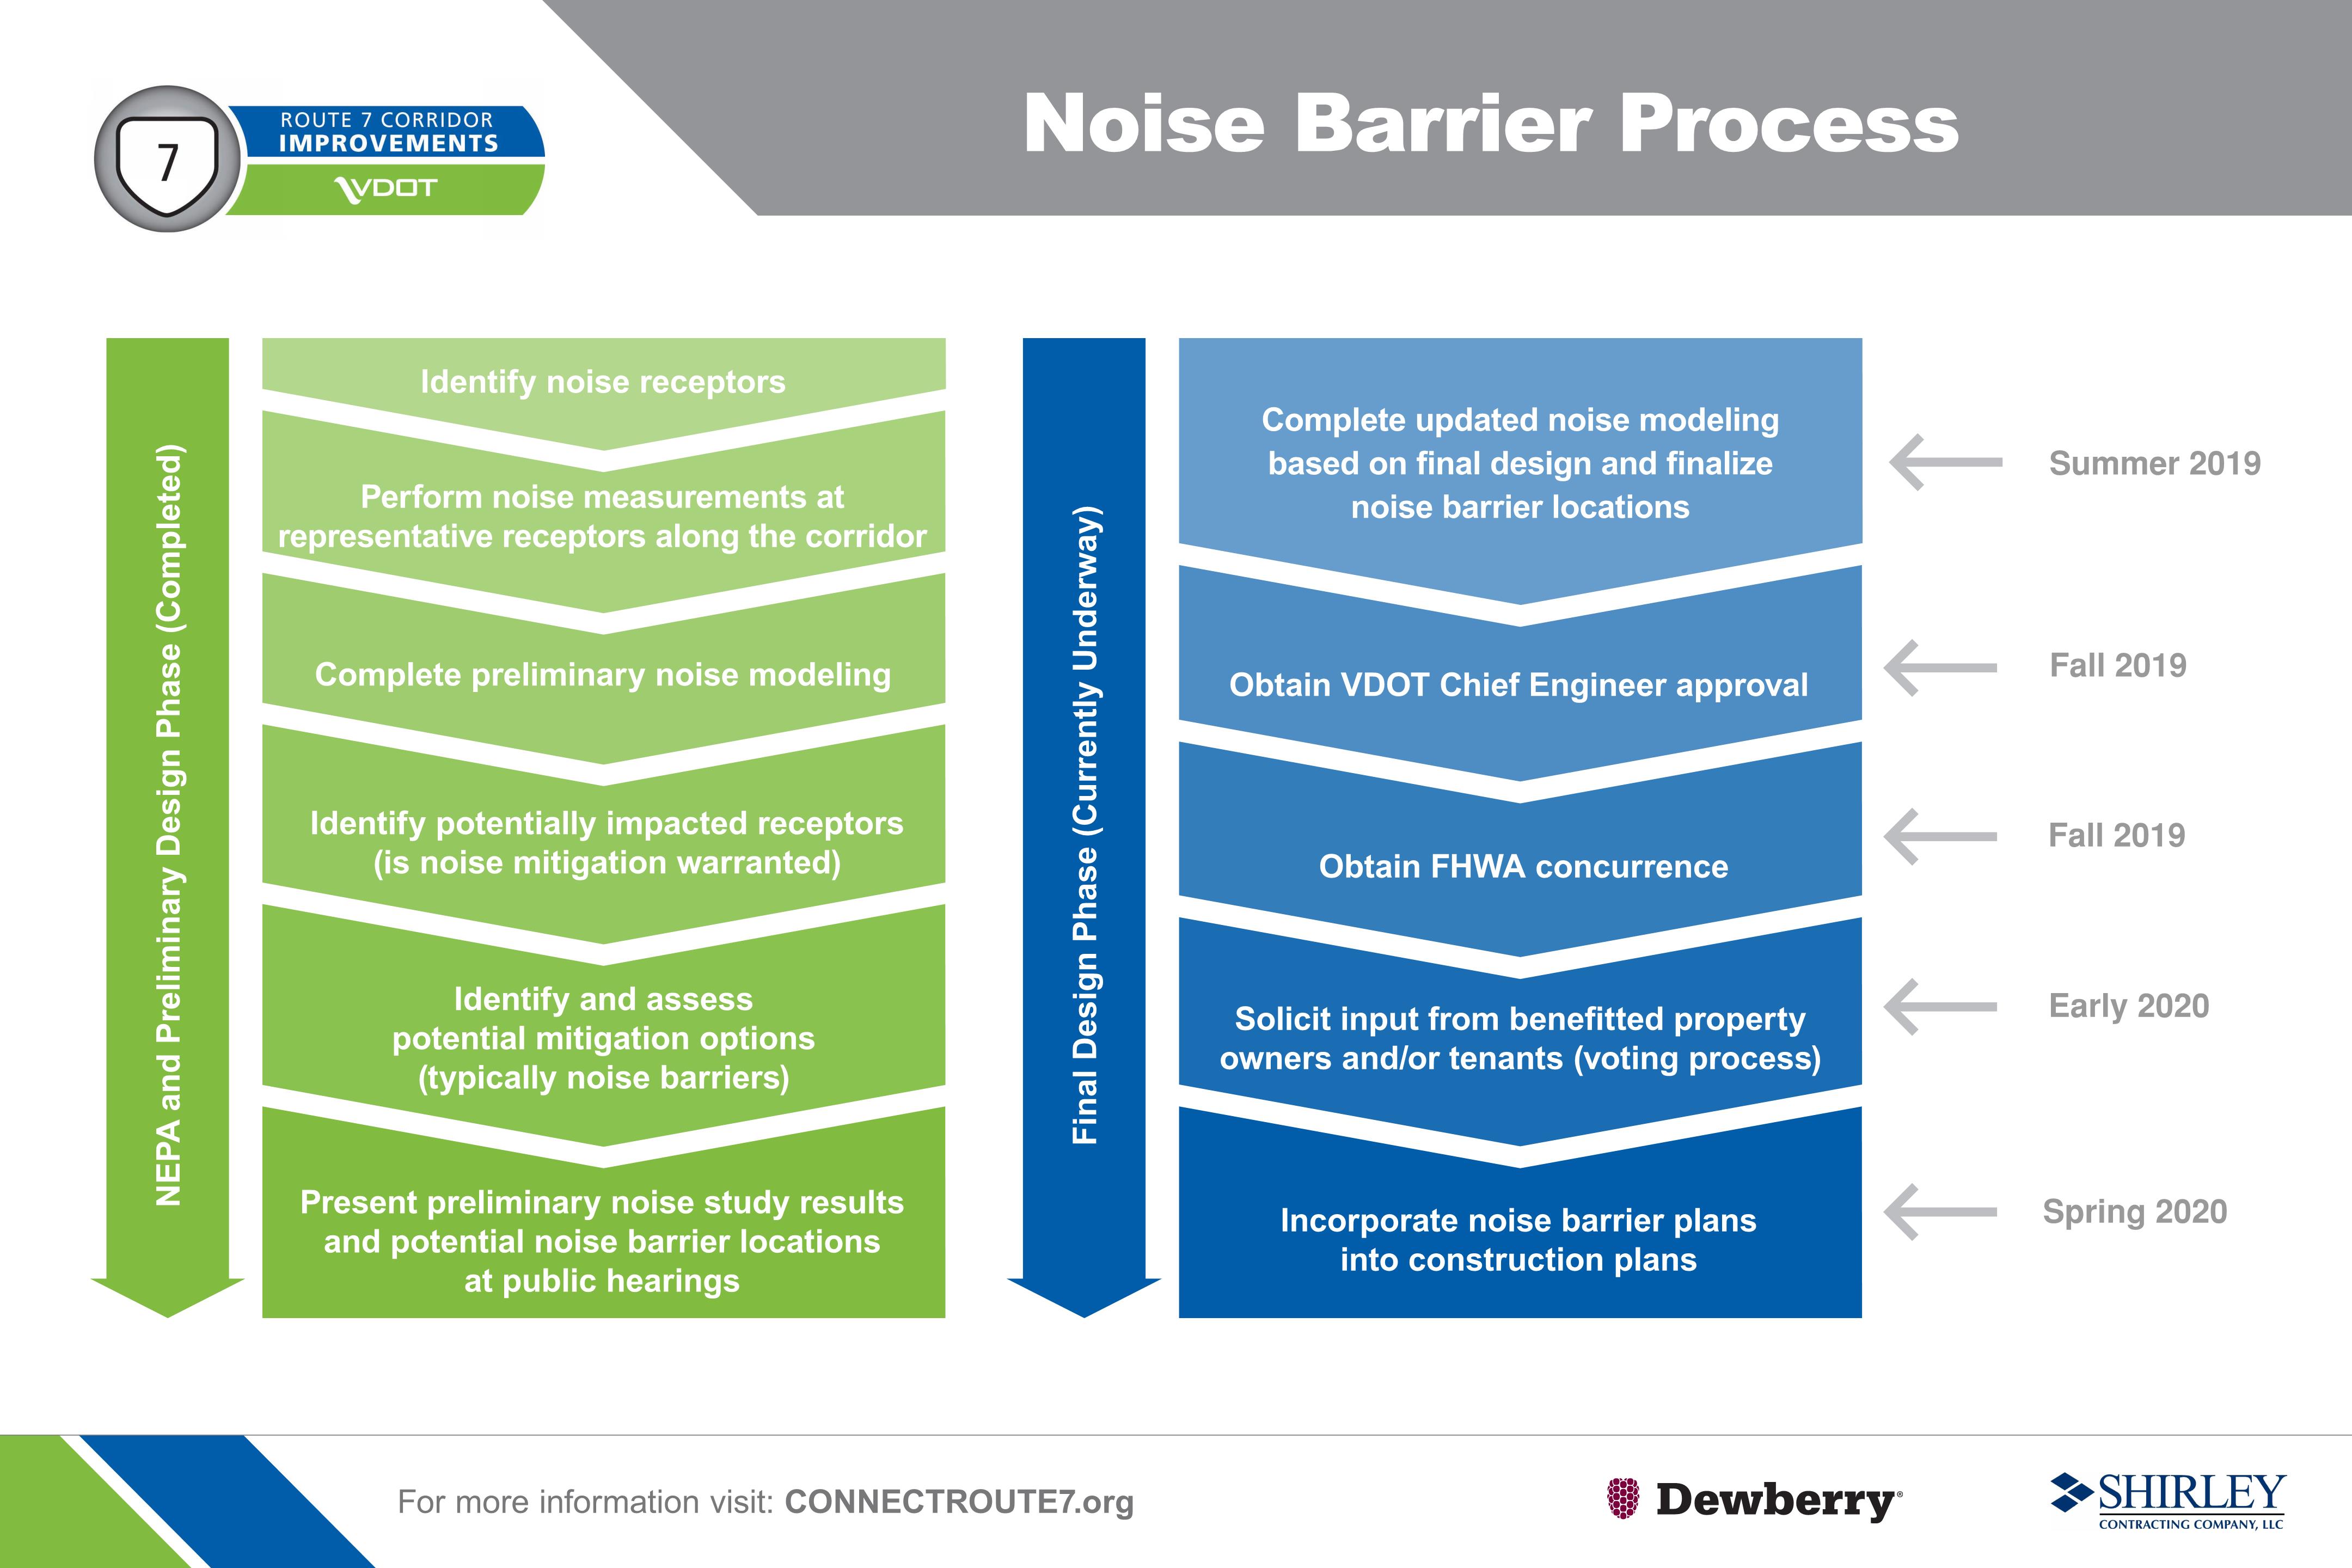 Noise Wall Process